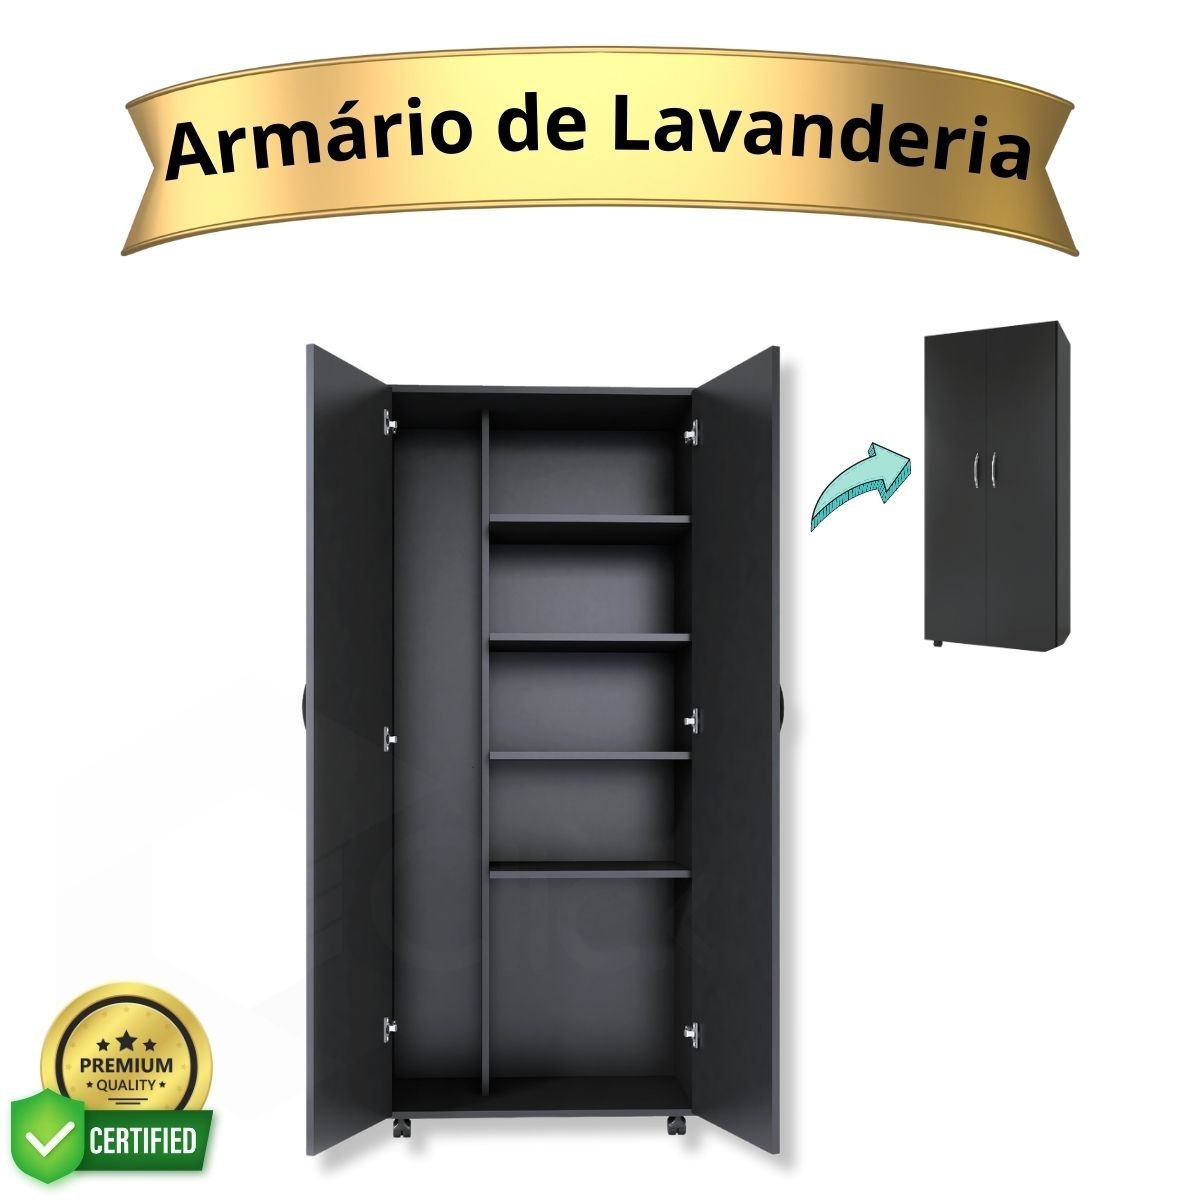 Armário para Lavanderia 2 Portas Multiuso Área Serviço ClickForte Armário Lavanderia Preto - 16